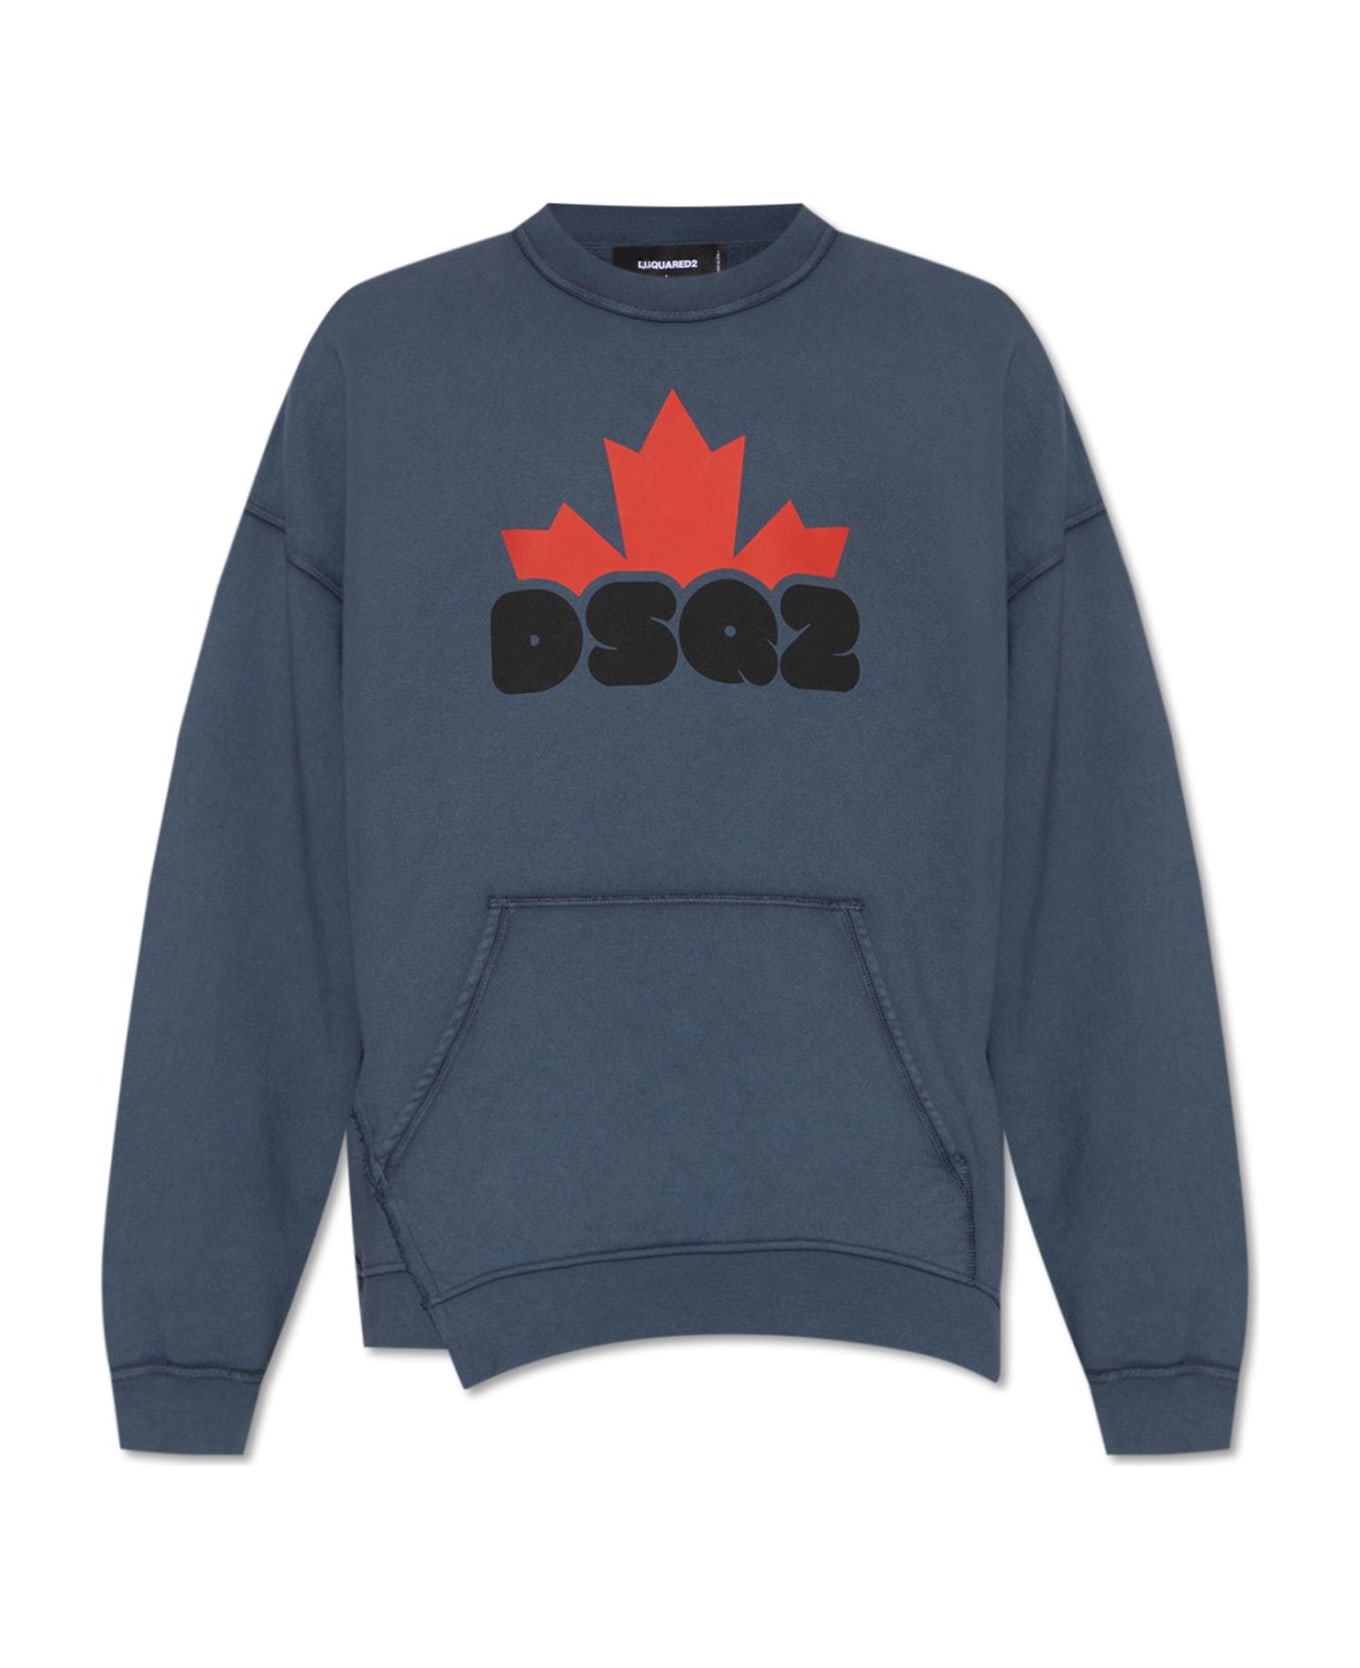 Dsquared2 Sweatshirt With Logo - NAVY BLUE